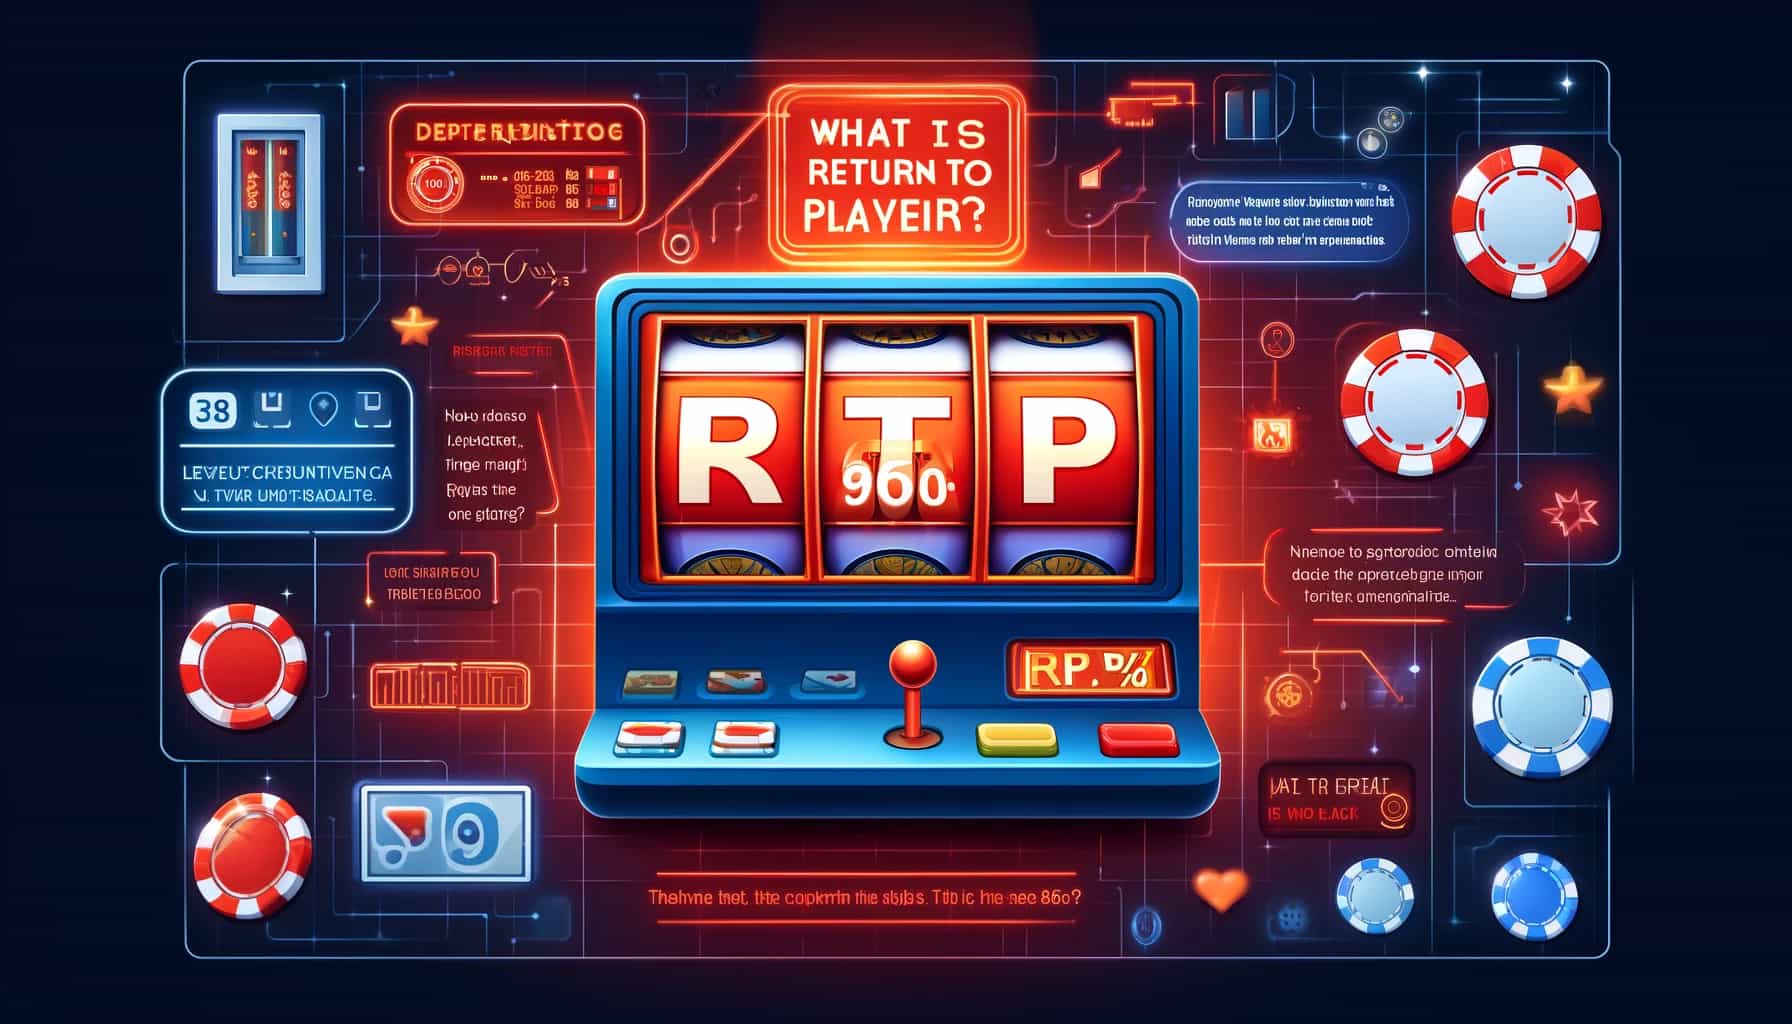 Slot machine with RTP on screen